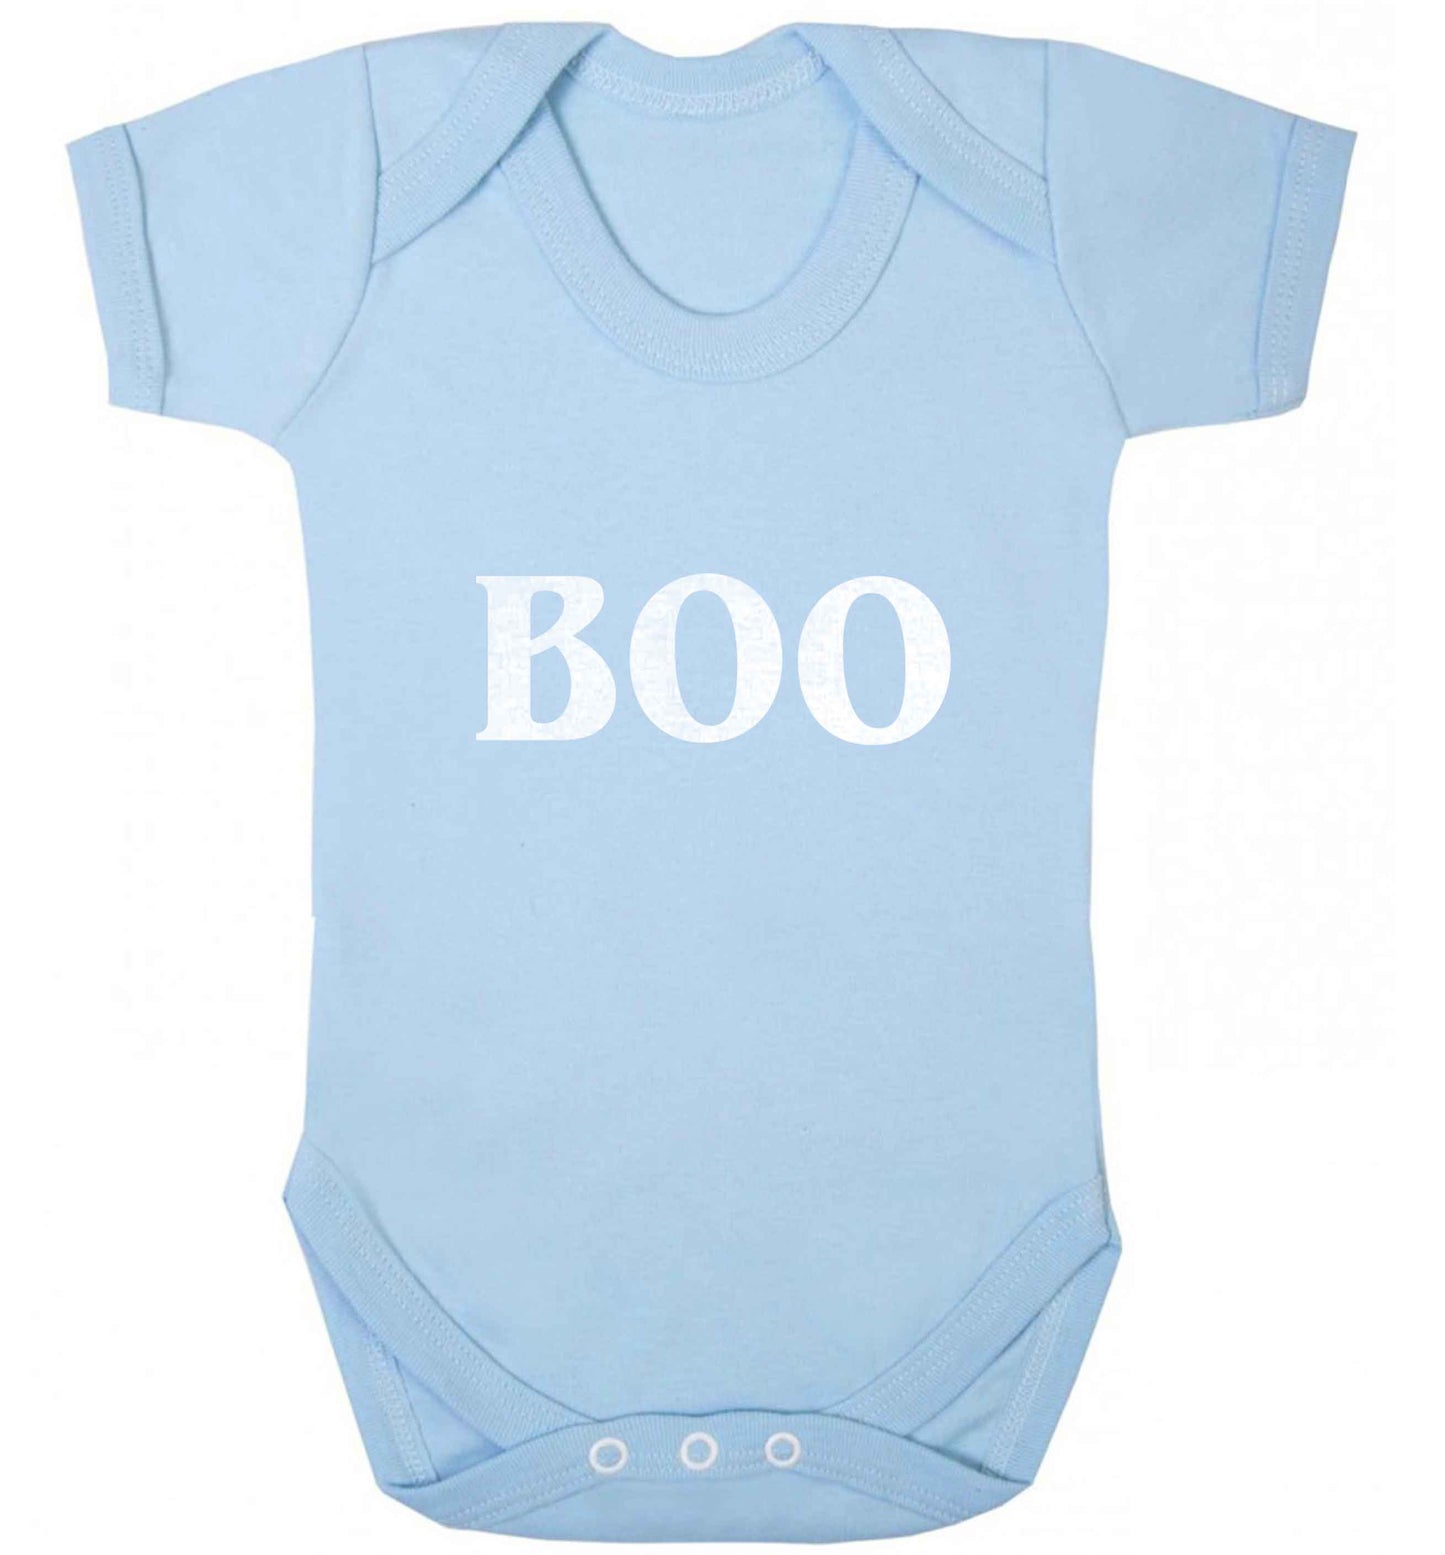 Boo baby vest pale blue 18-24 months